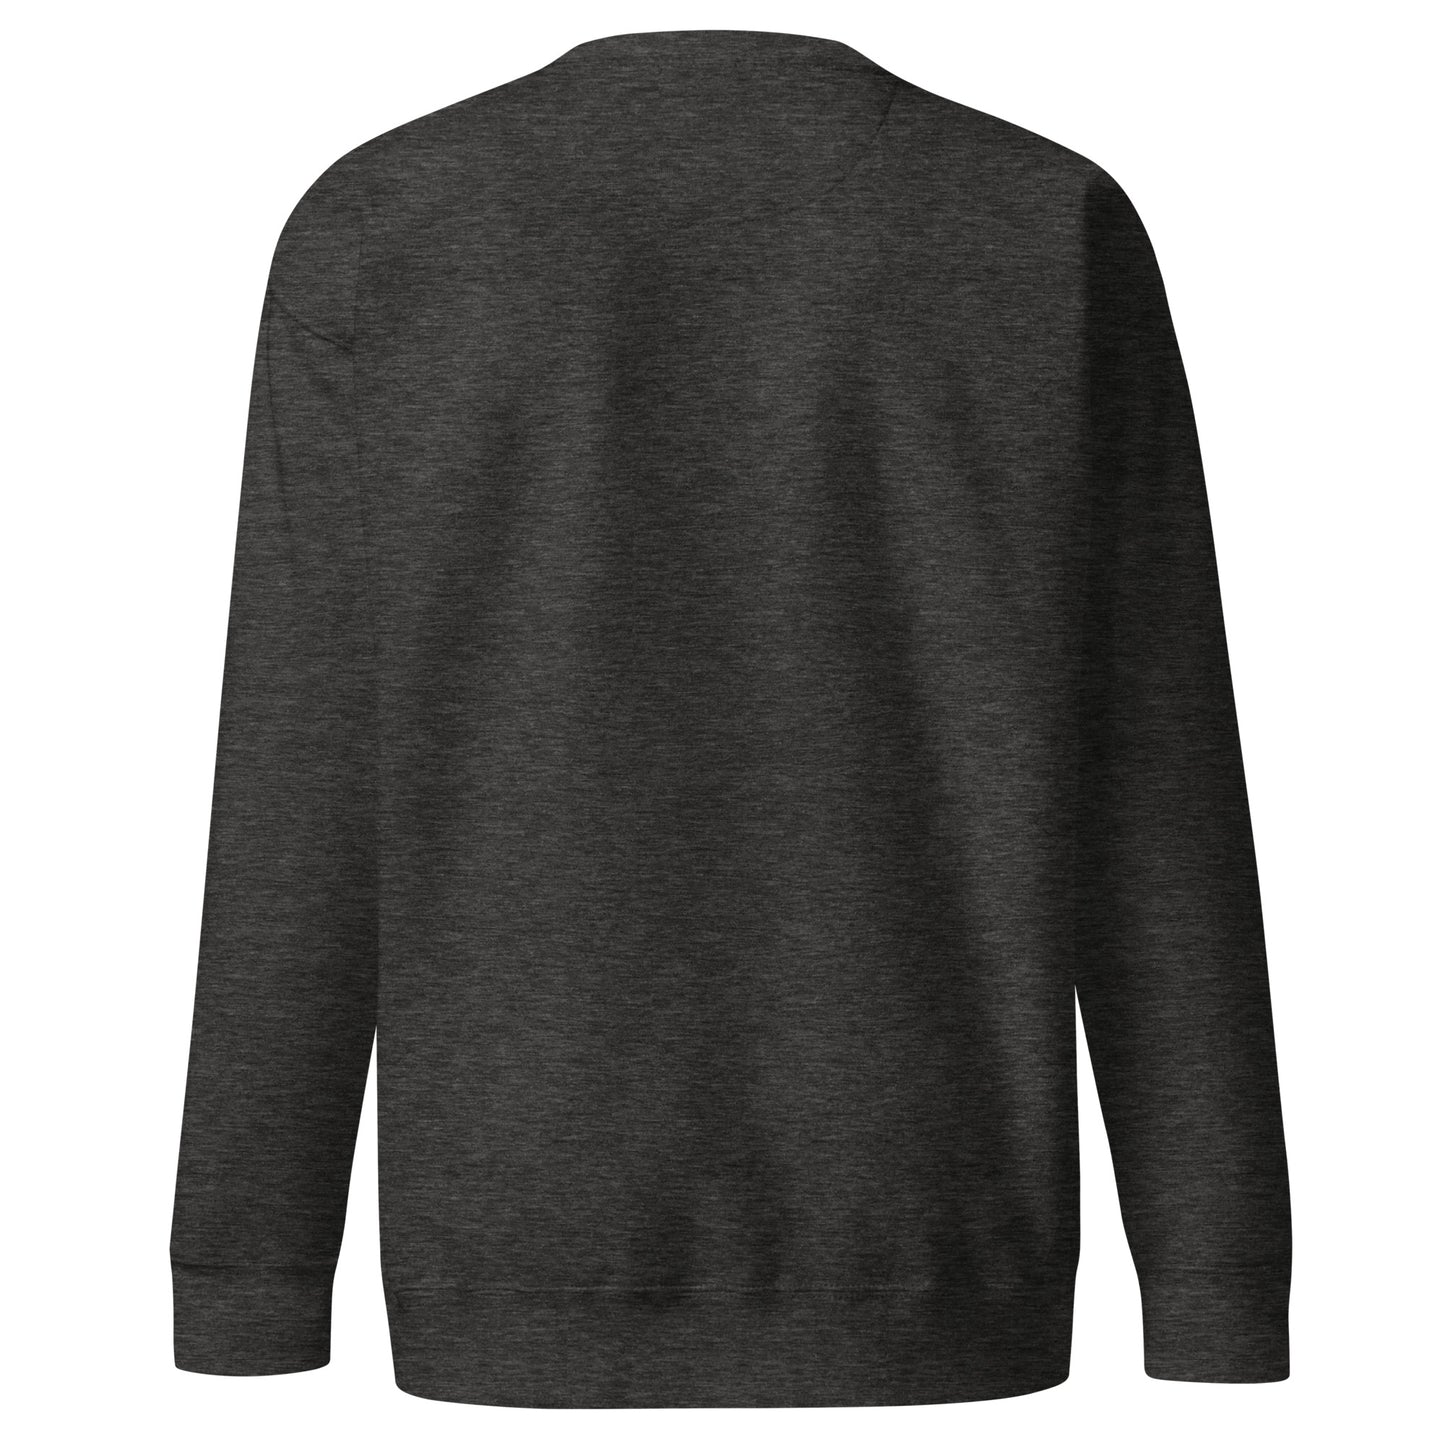 Élisabeth Akaïa Kaï - Unisex premium sweatshirt